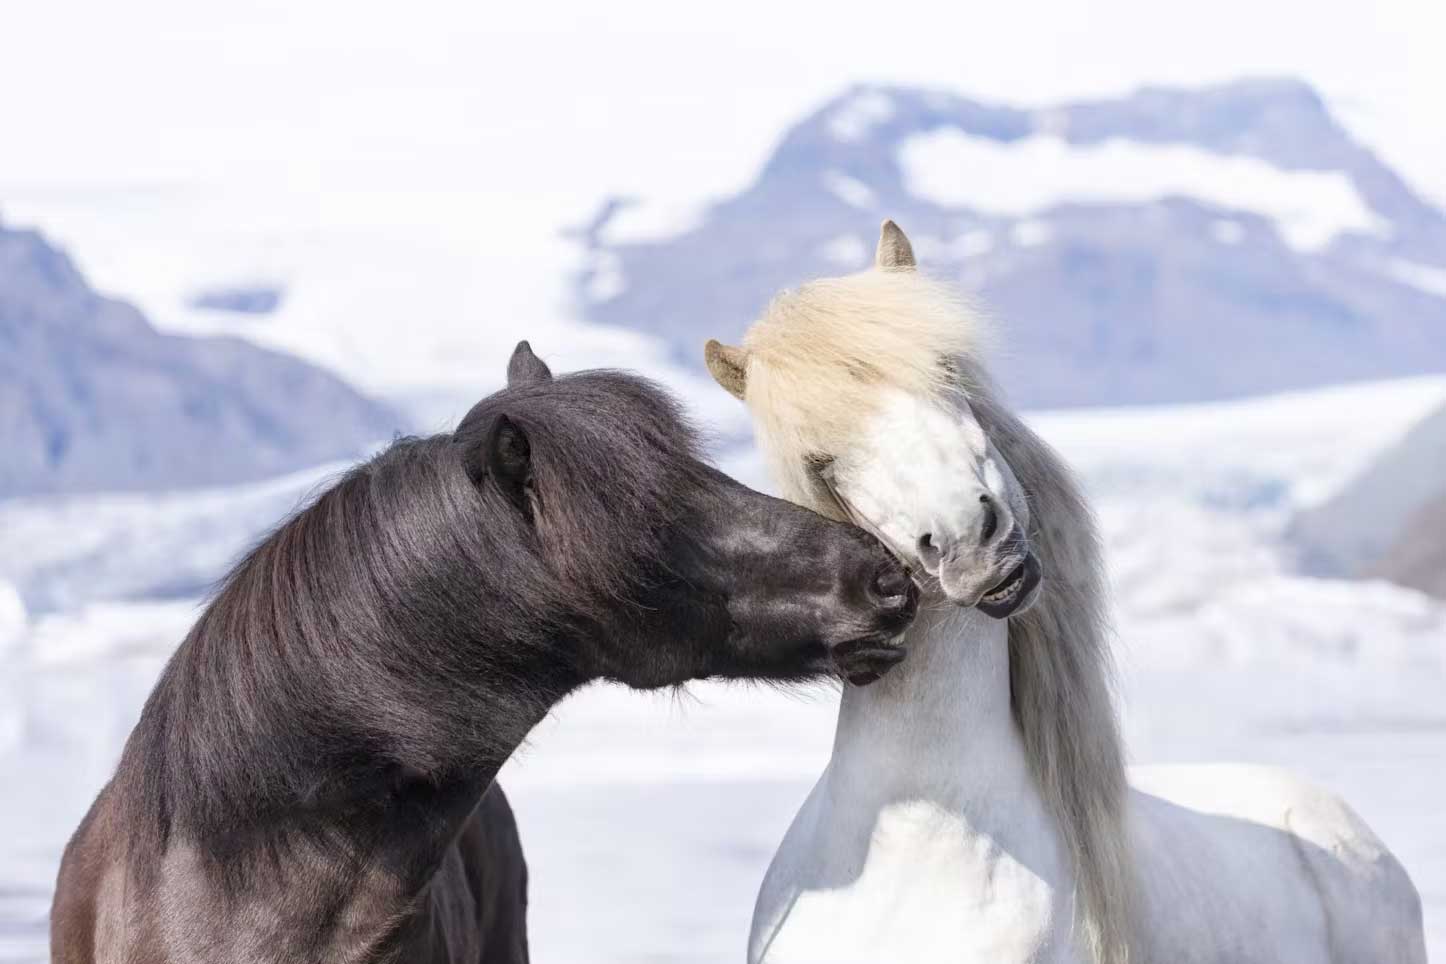 Photos courtesy of the Horses of Iceland